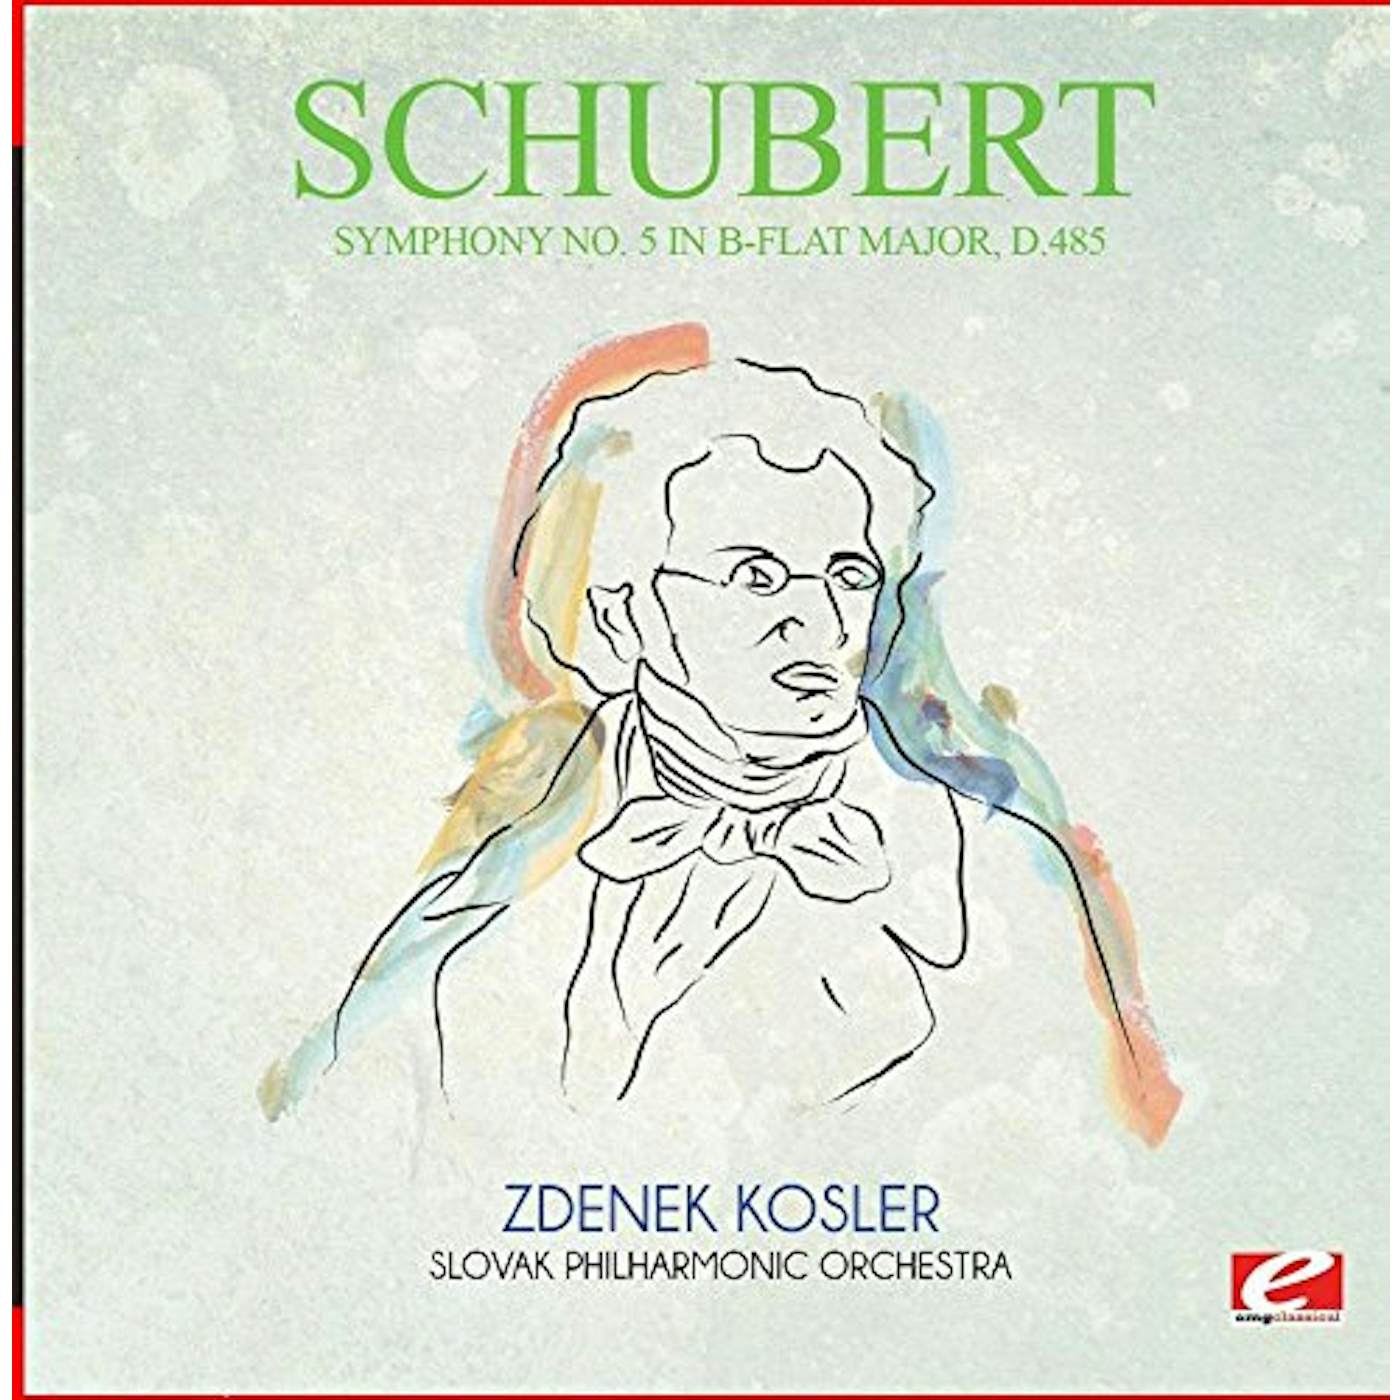 Schubert SYMPHONY NO. 5 IN B-FLAT MAJOR D.485 CD